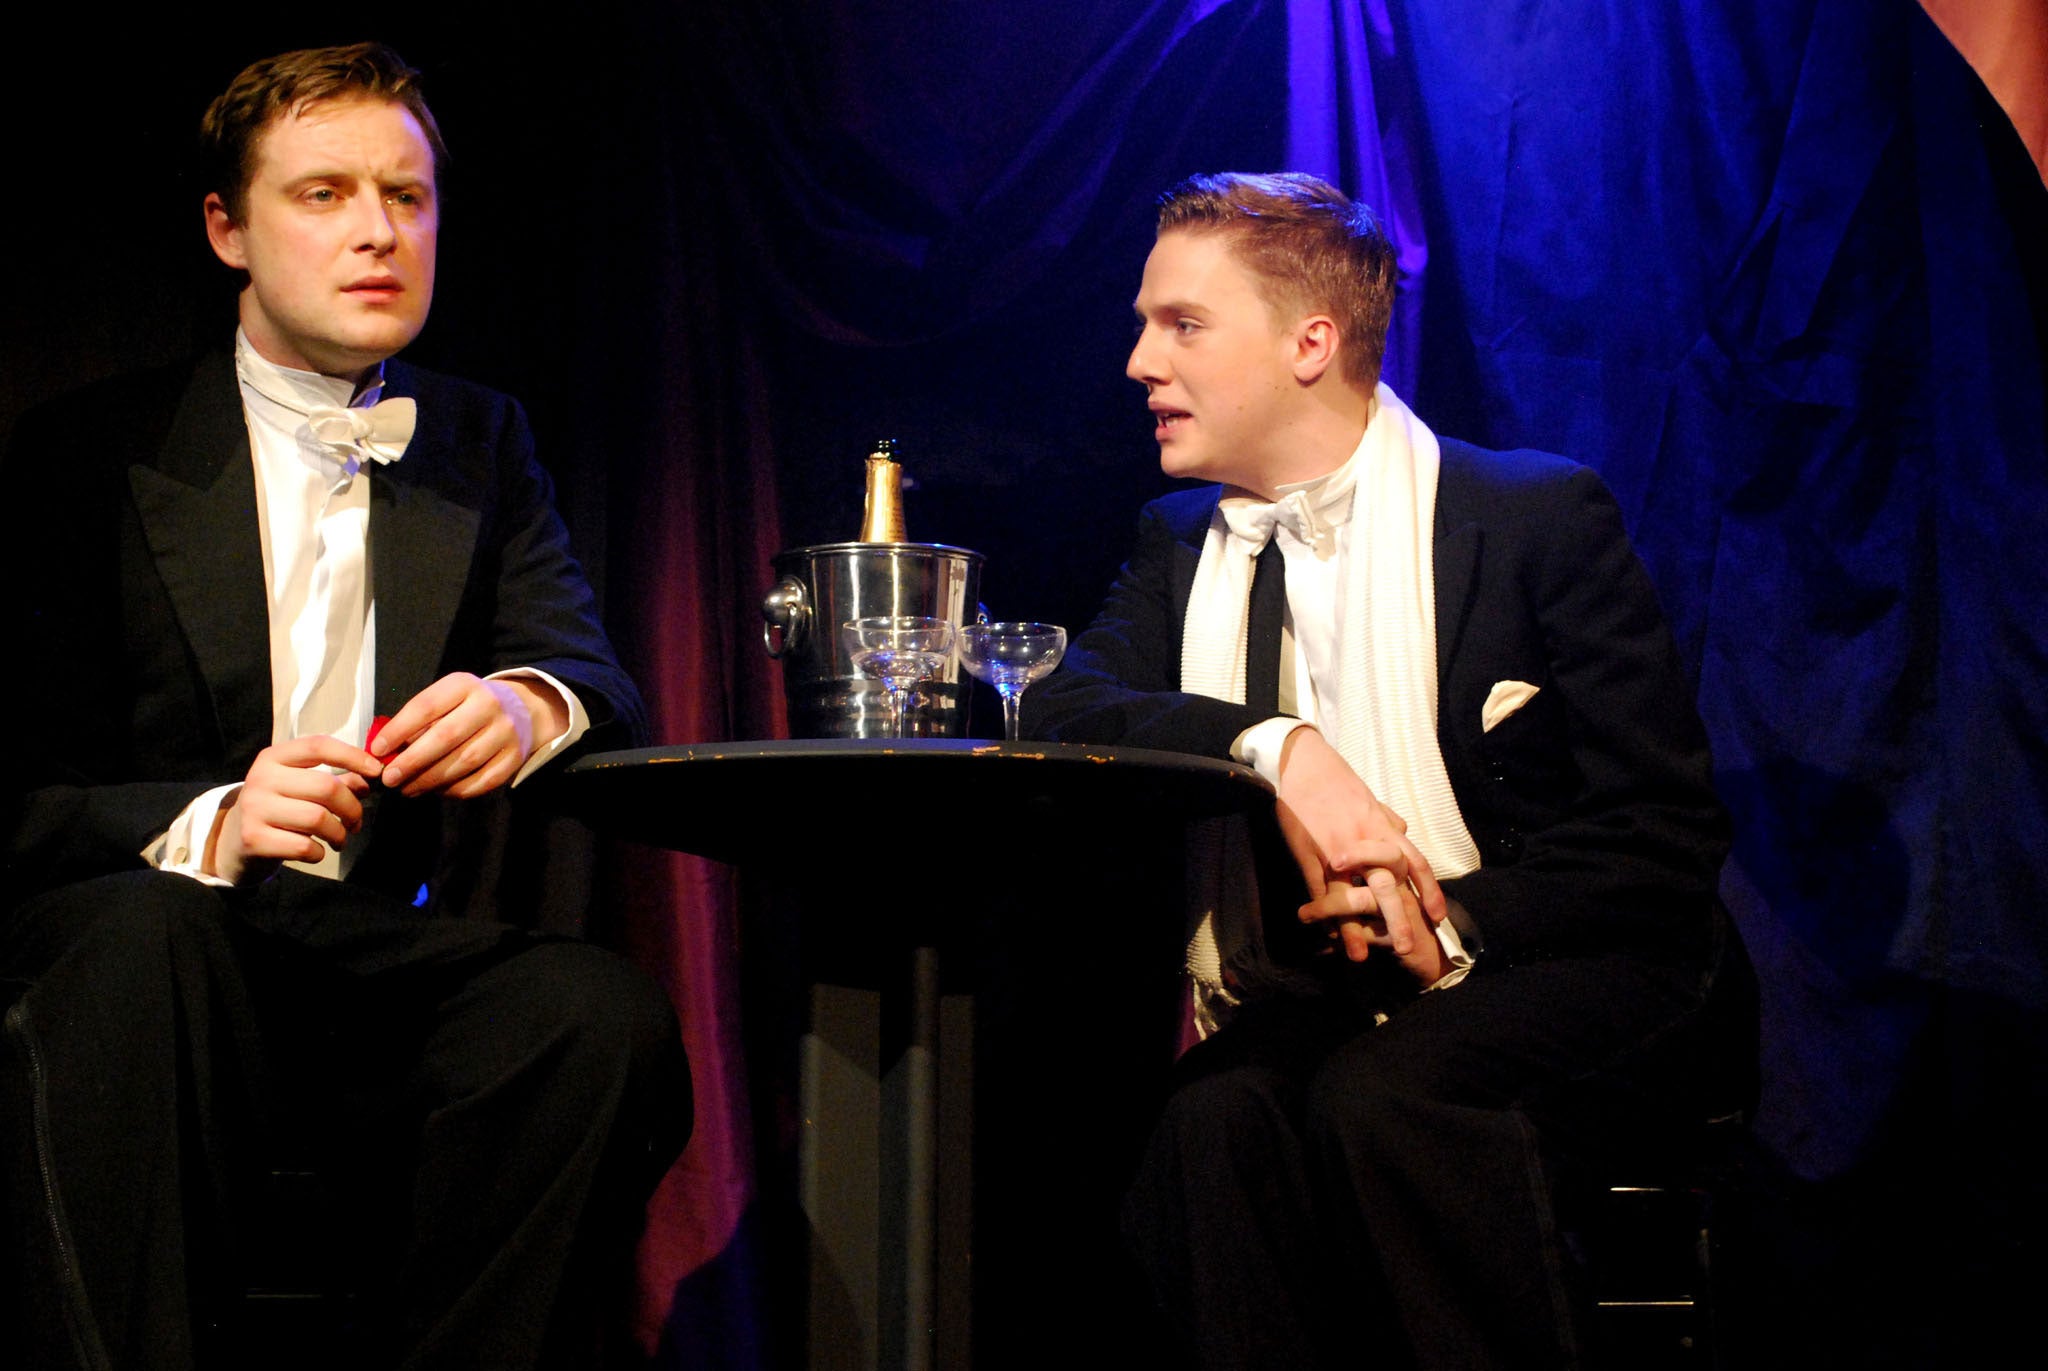 tephen Ashfield as Casey O’Brien, Ben Kavanagh as Clarence Cutler
at The Jermyn Street Theatre